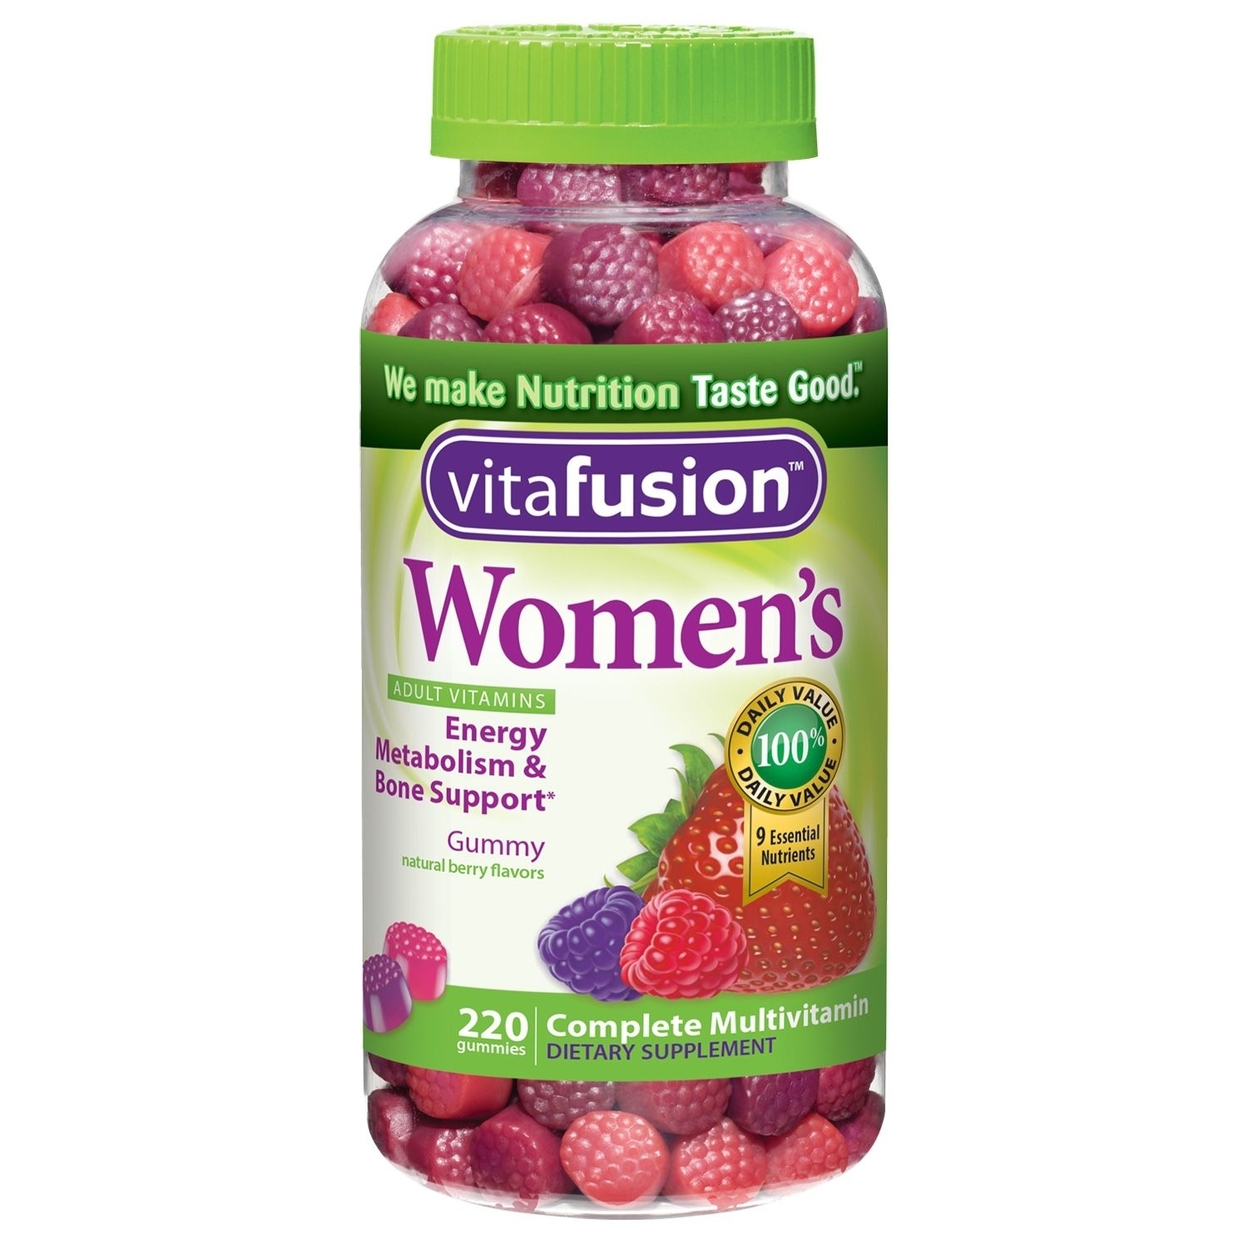 VitaFusion Adult Vitamins, Women's (220 Count)